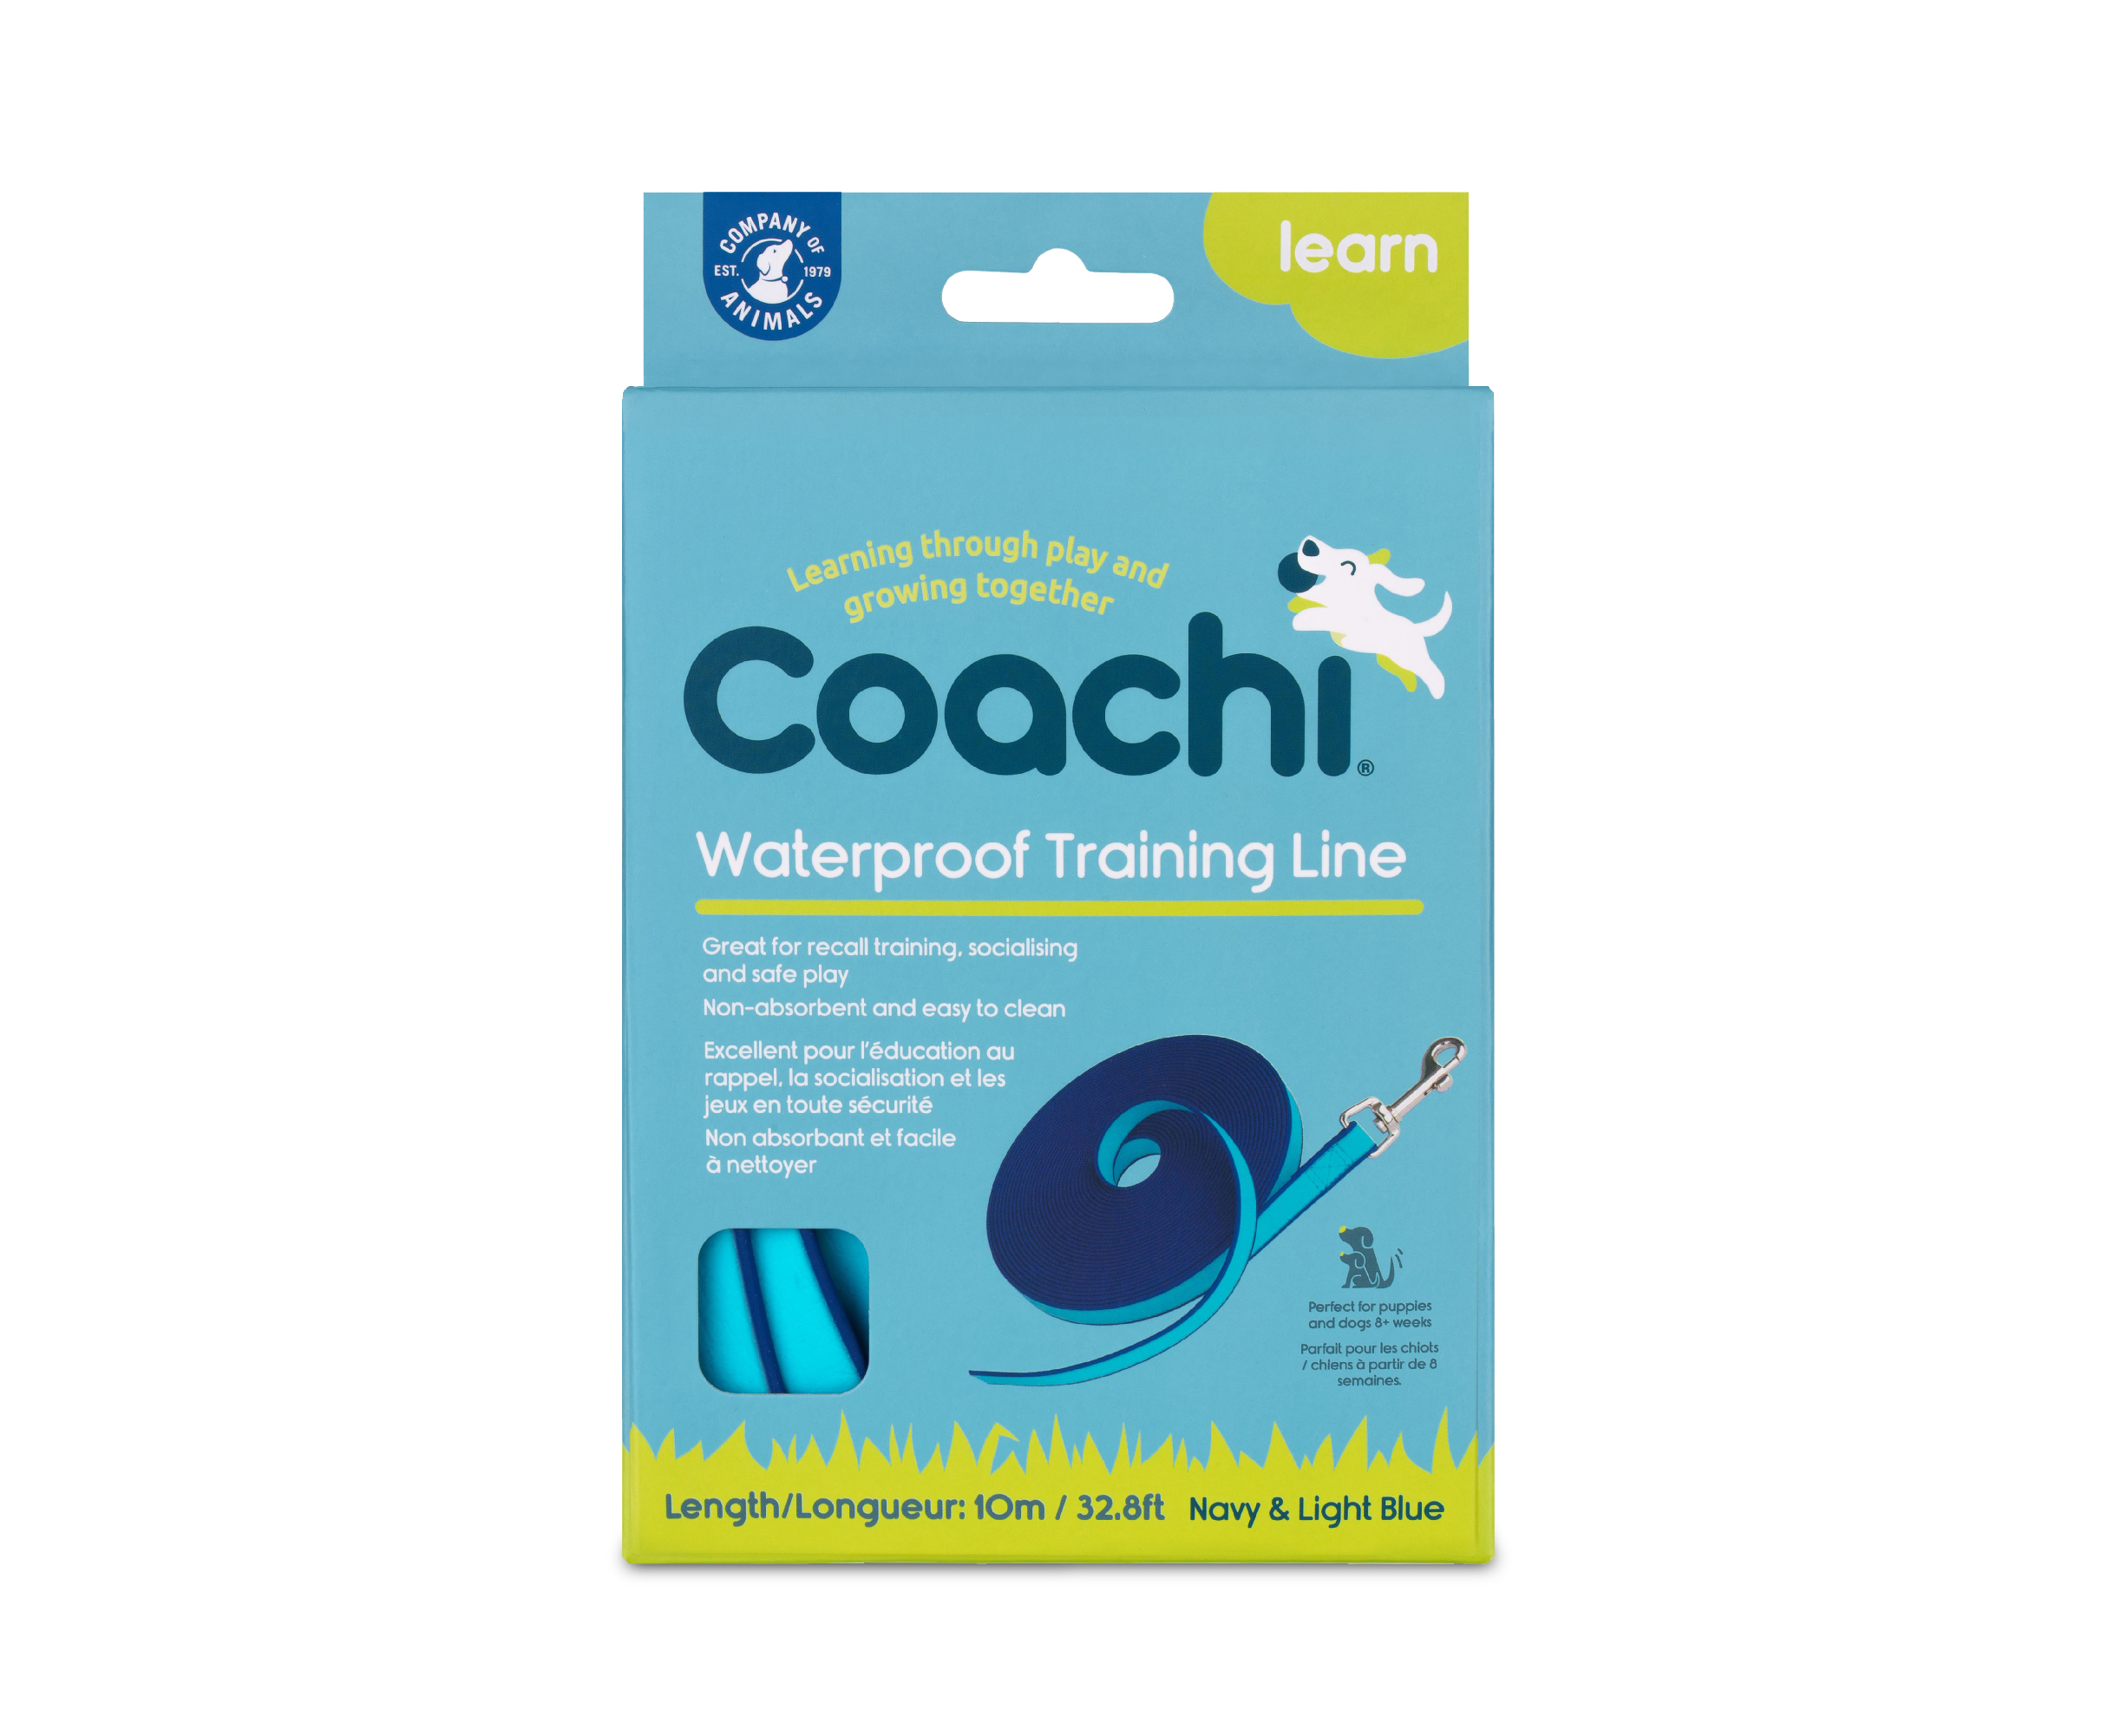 Waterproof training line and packaging